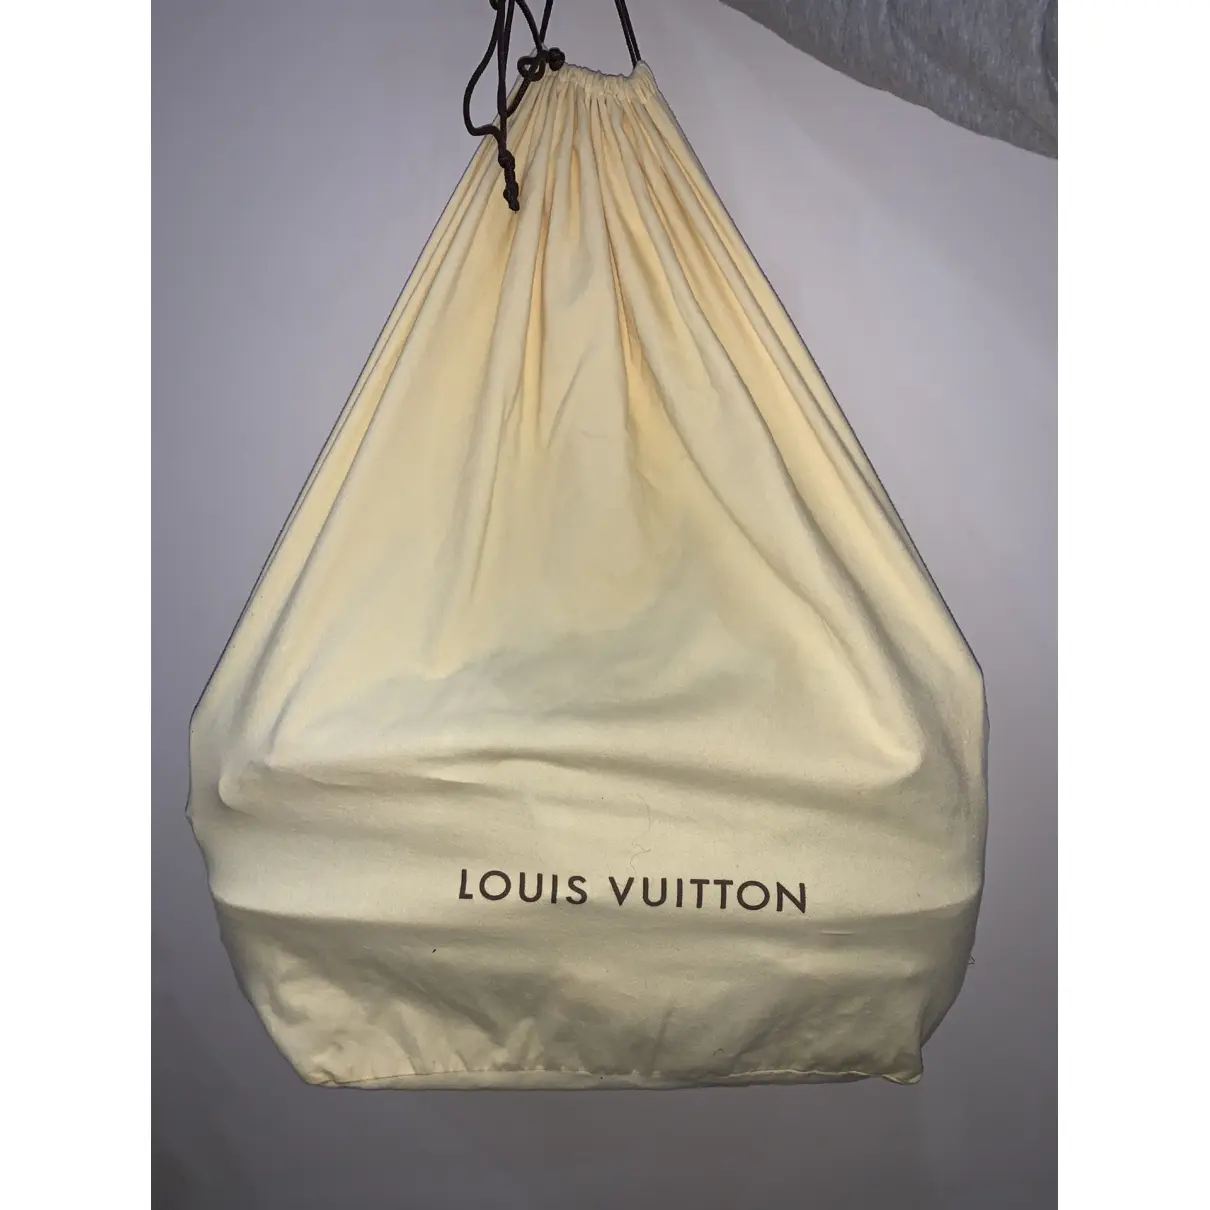 Buy Louis Vuitton Garment leather travel bag online